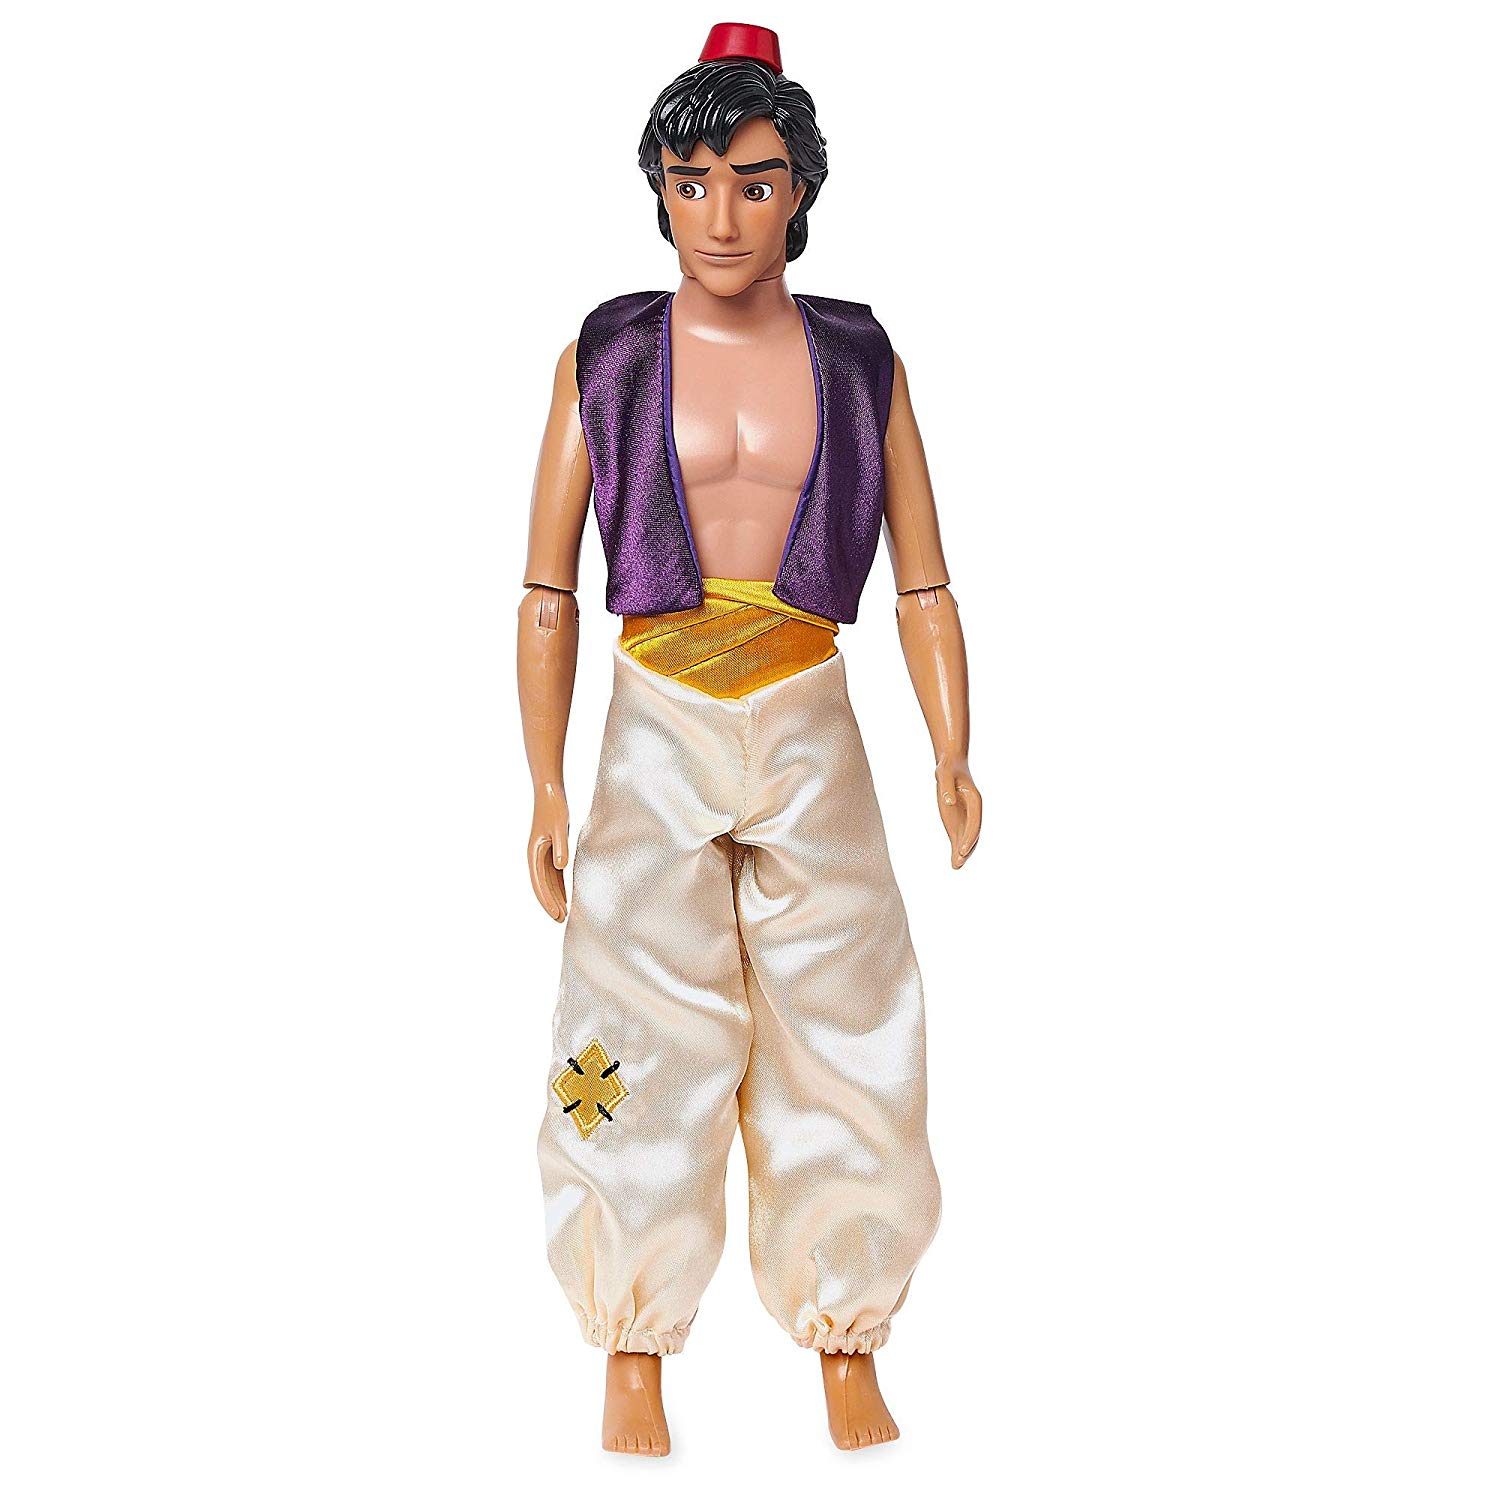 Official Disney Aladdin 30cm Classic Doll Figure by Disney 